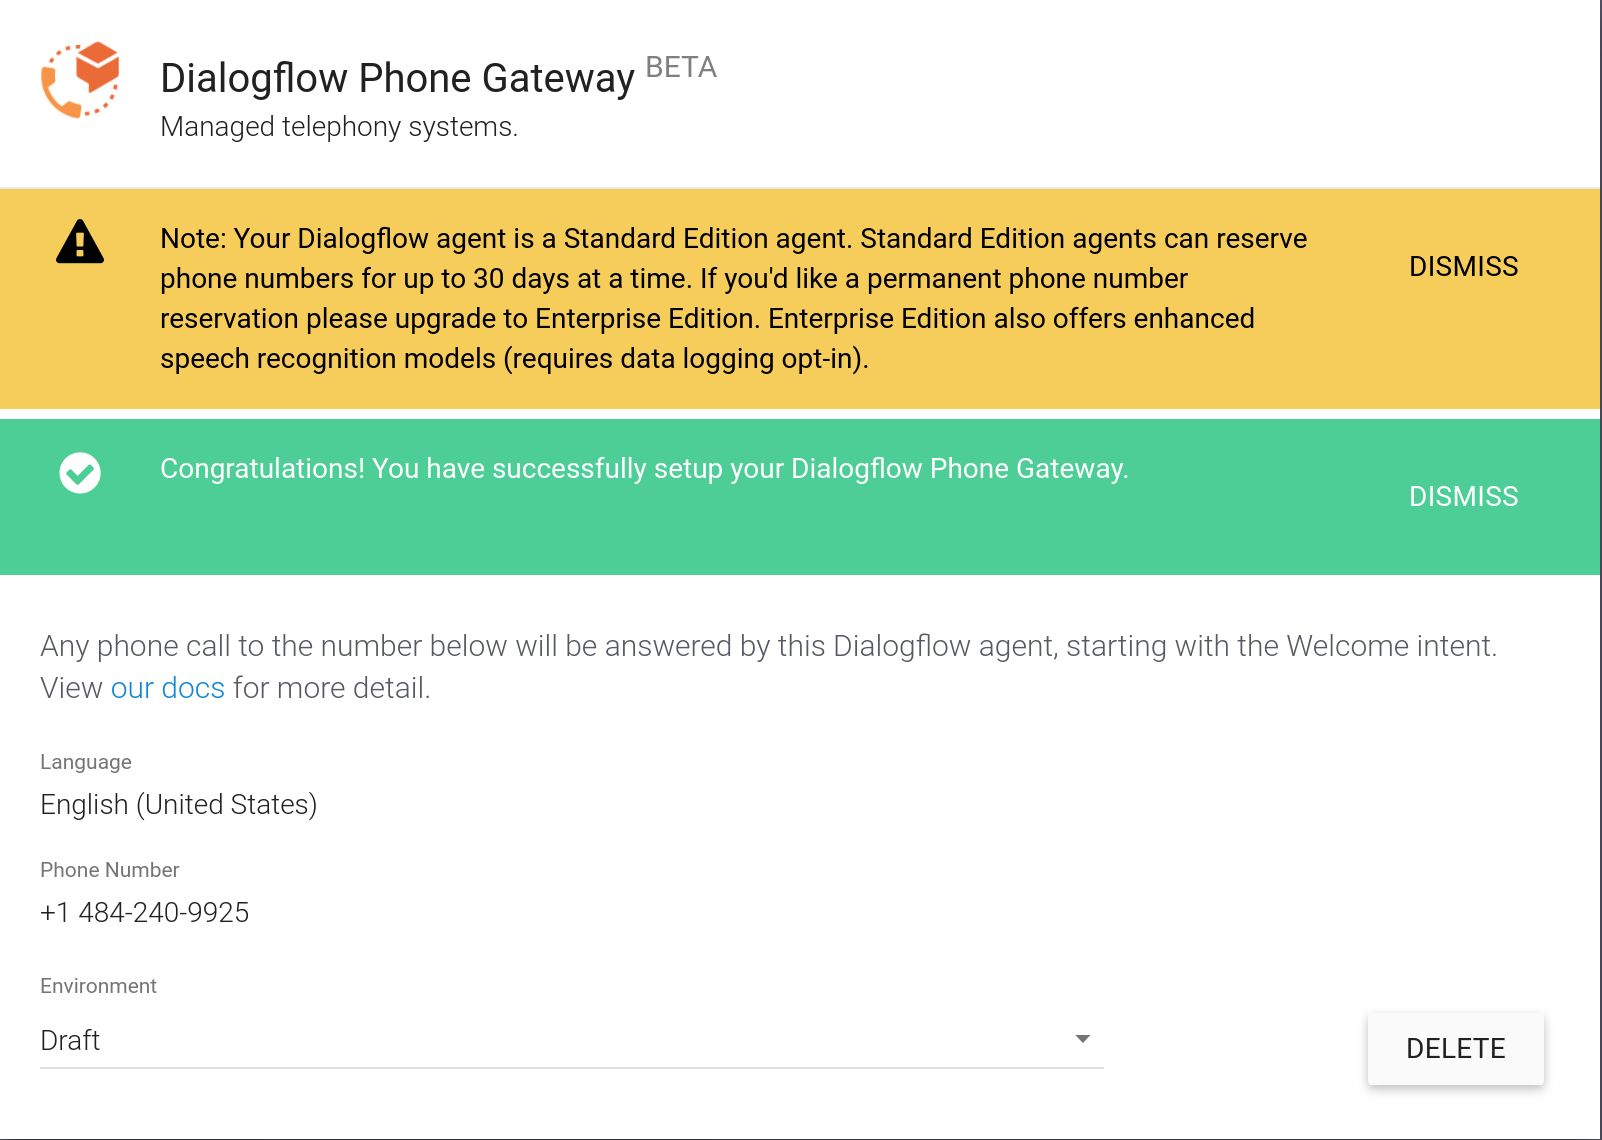 Dialogflow Phone Gateway Congraulations banner